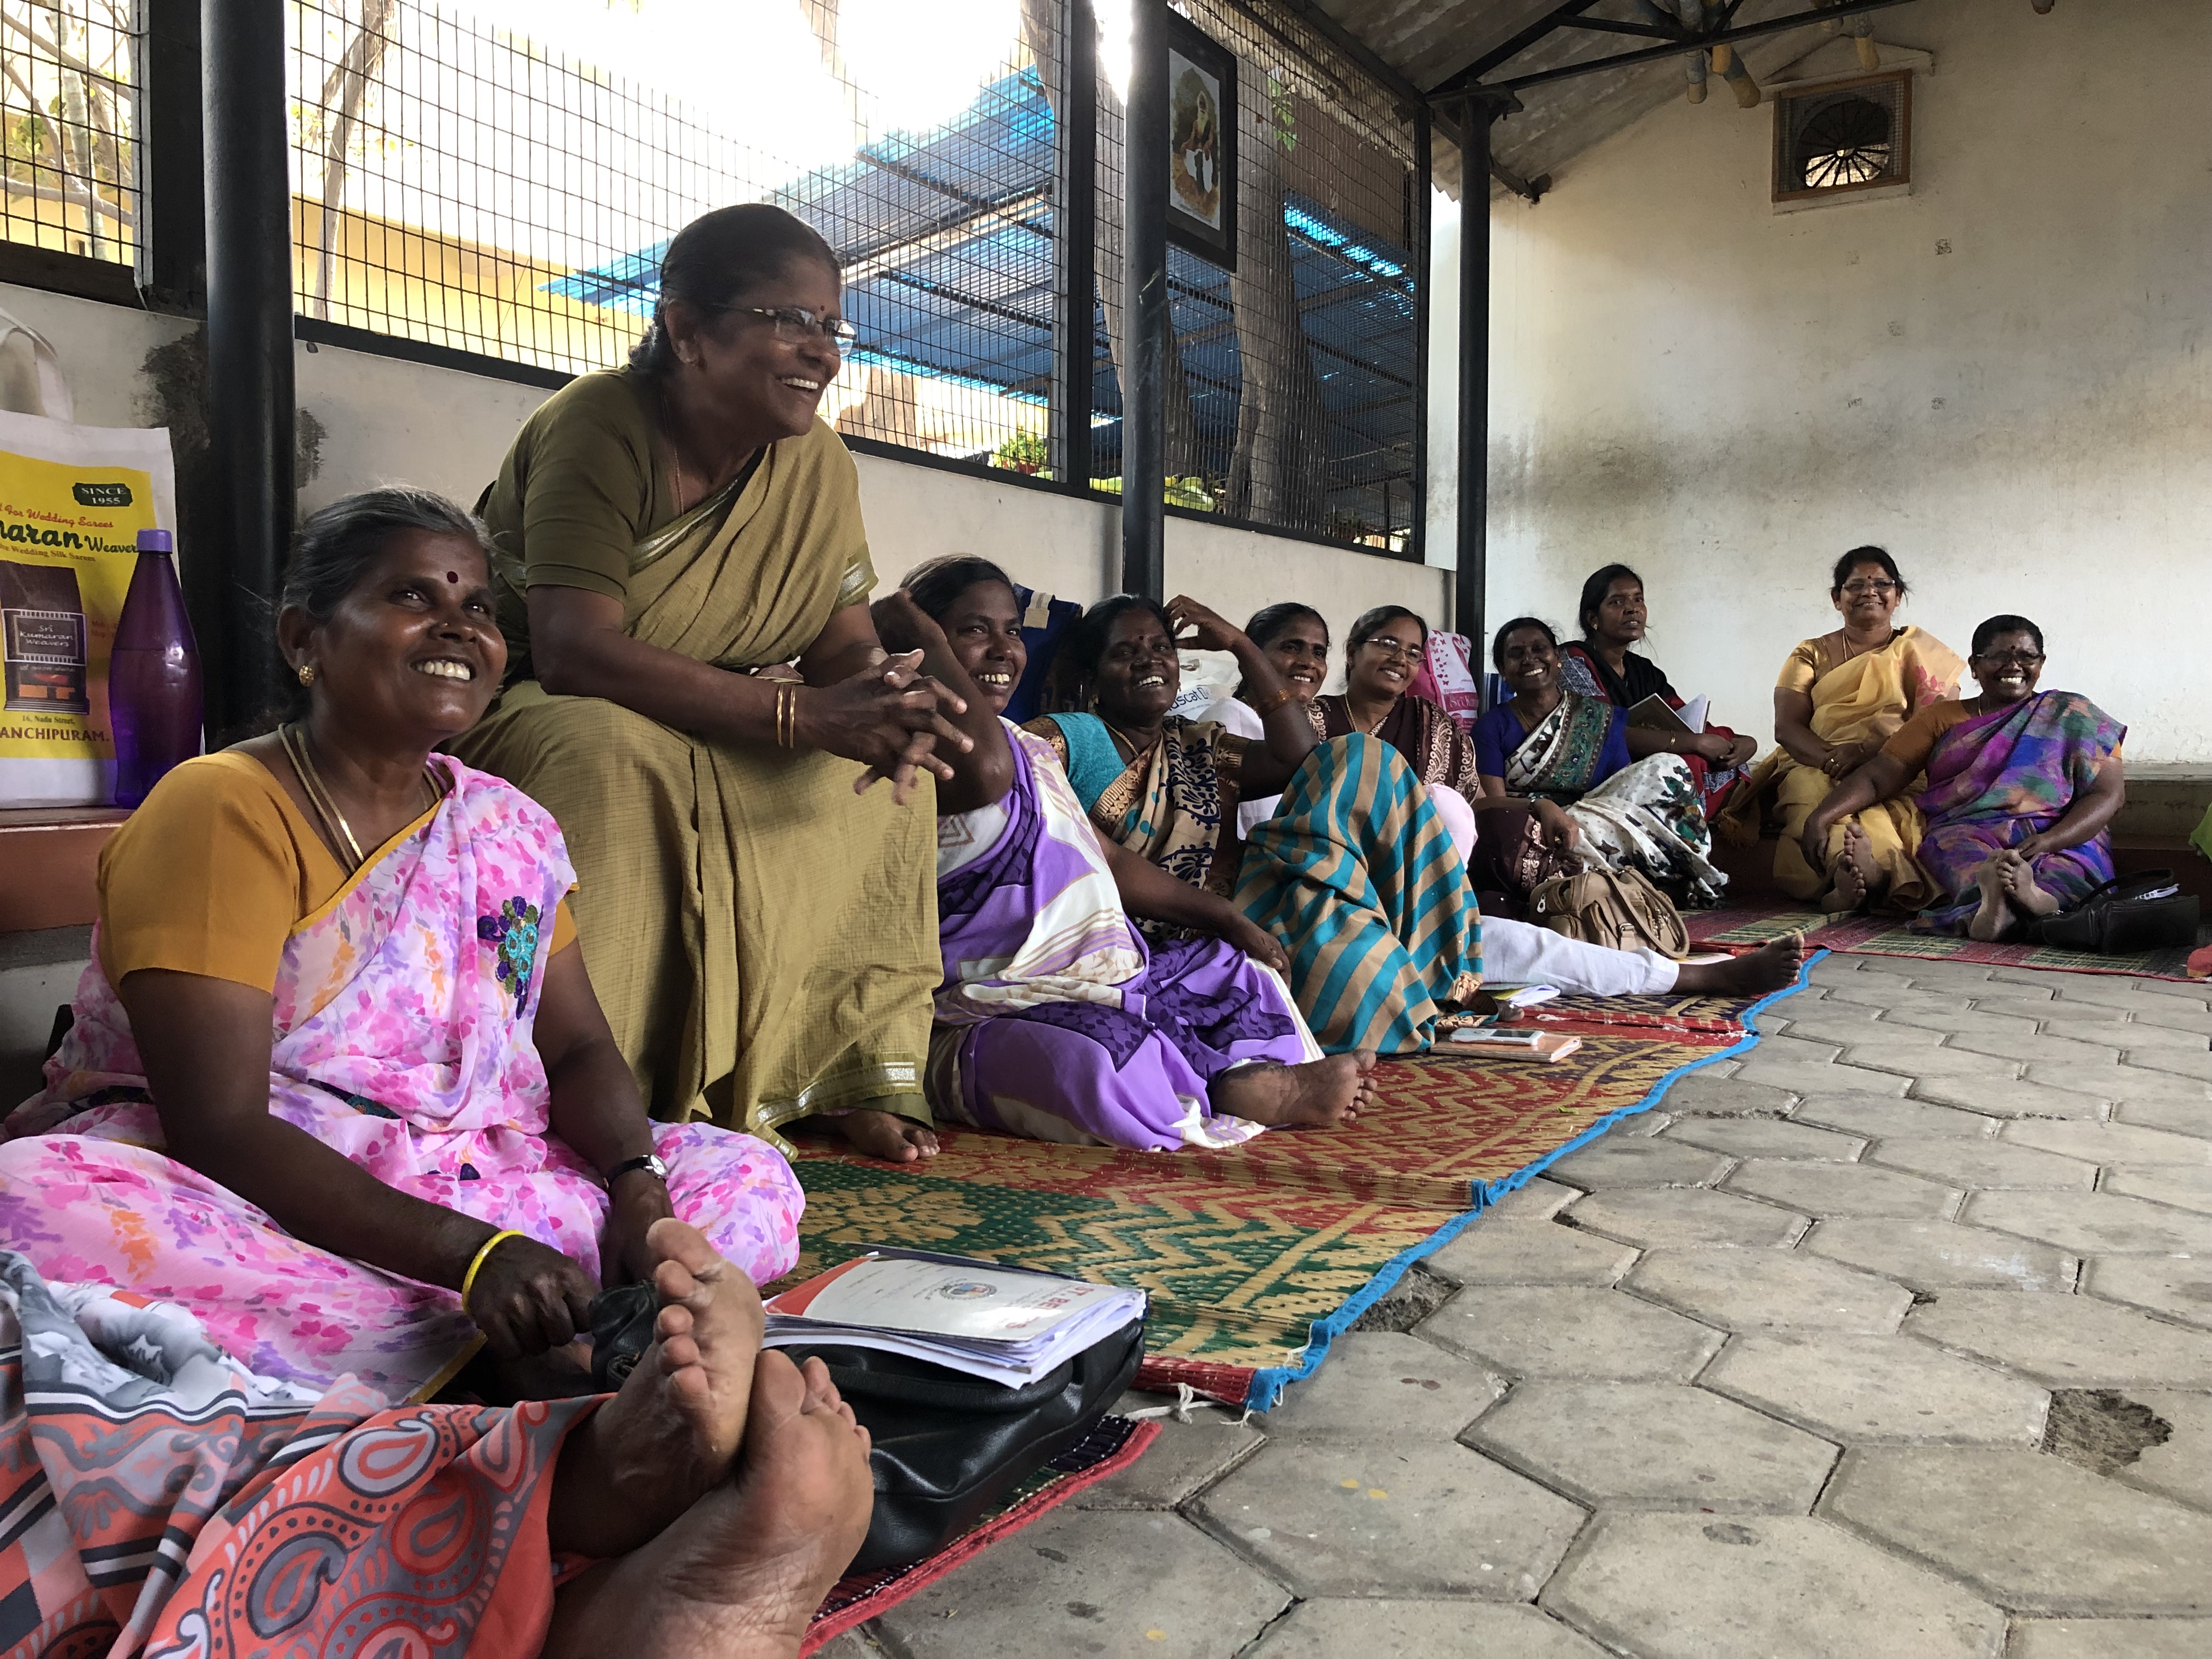 Introducing Tamil Nadu Women's Collective | Inter Pares